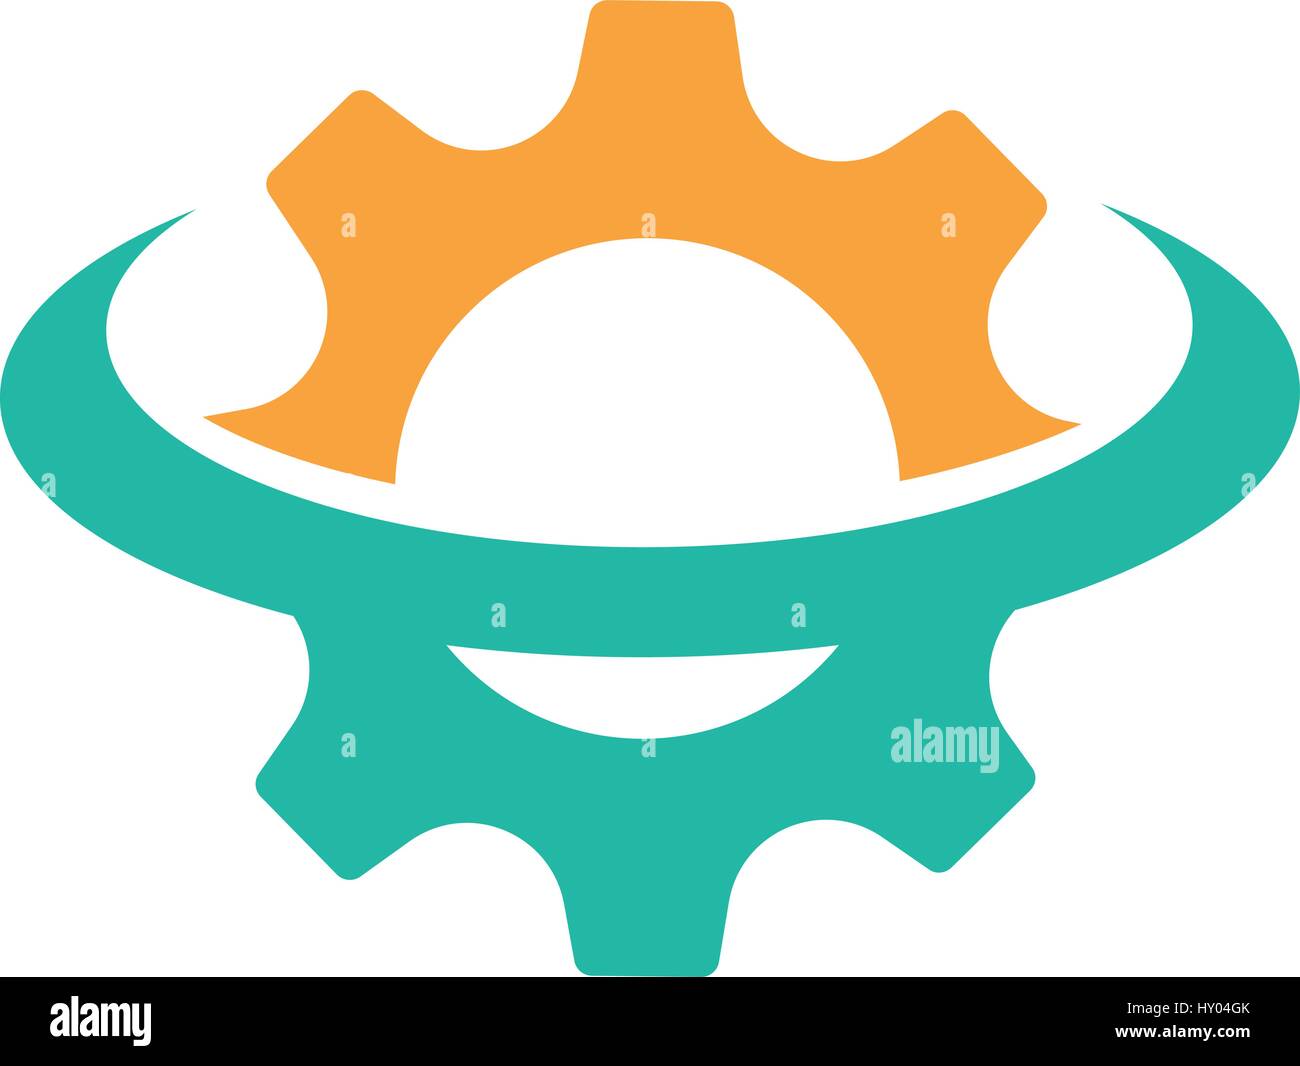 Gear Symbol vector illustration, setting or maintenance concept Stock Vector